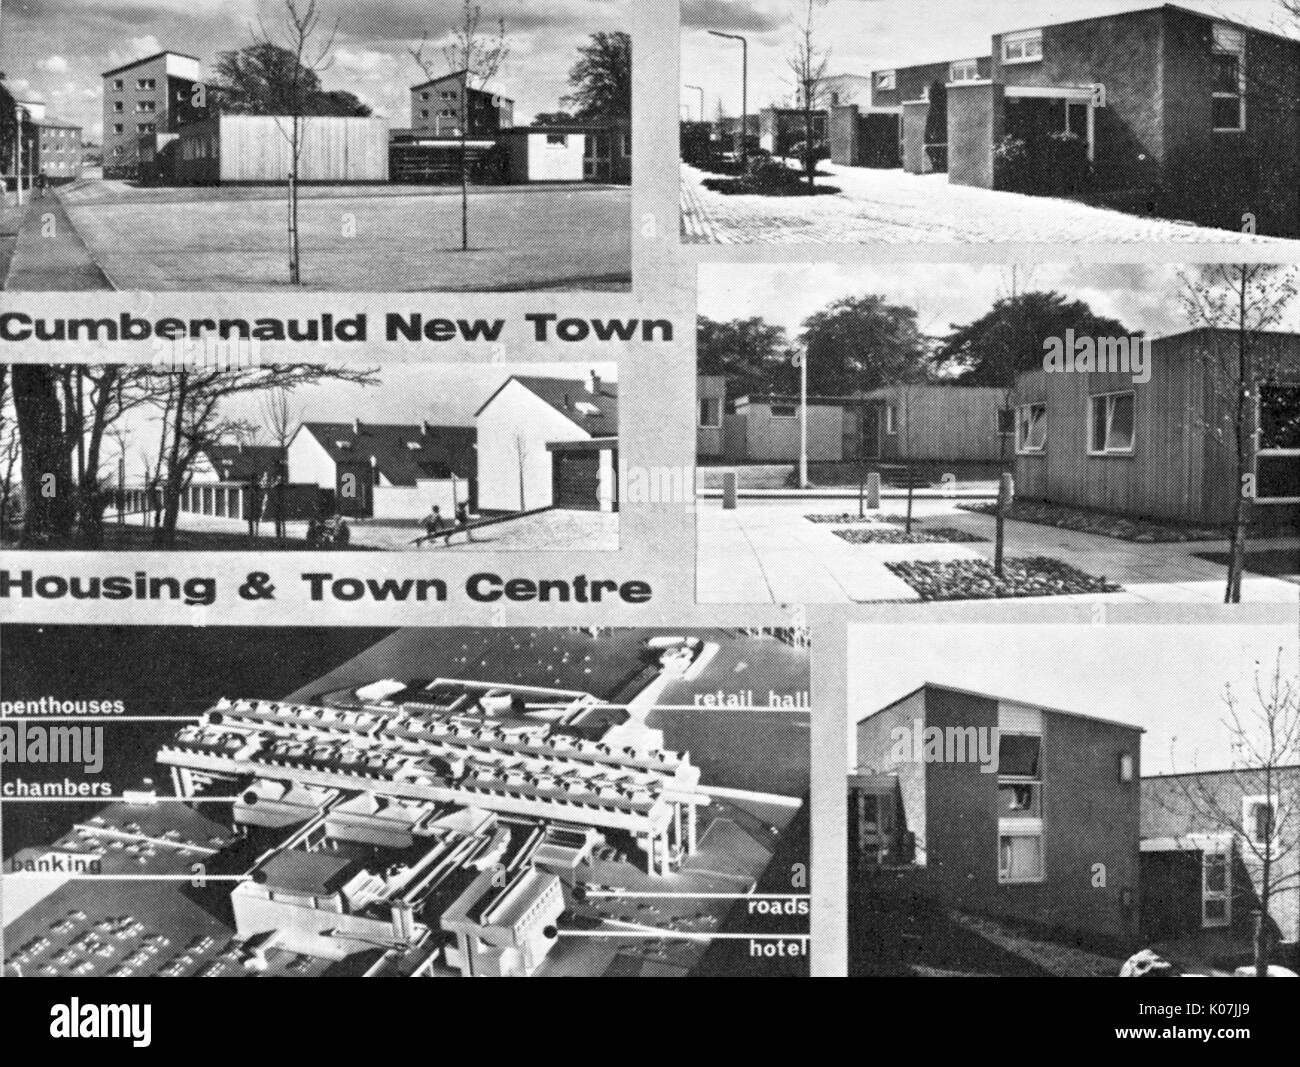 Cumbernauld New Town, Scotland - Housing & Town Centre Stock Photo